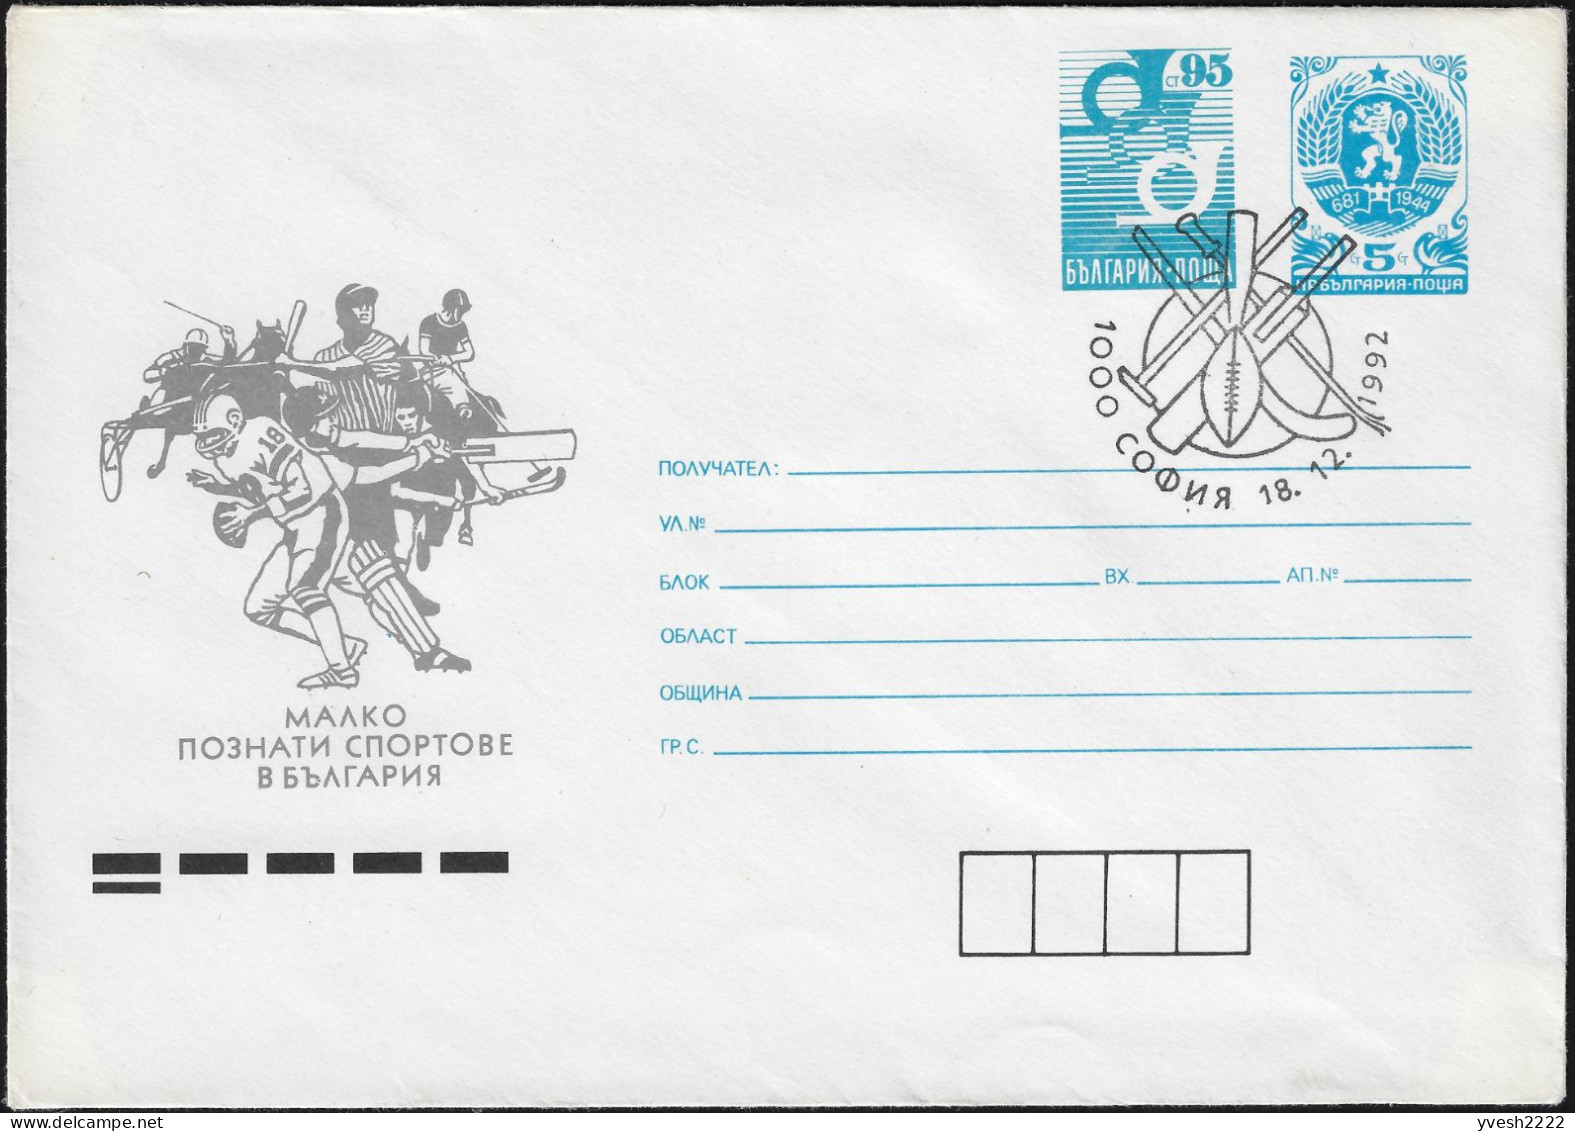 Bulgarie 1992. Entier Postal, Enveloppe. Des Sports Peu Connus Des Bulgares. Baseball, Cricket, Hockey, Hippisme (sulky) - Rasenhockey